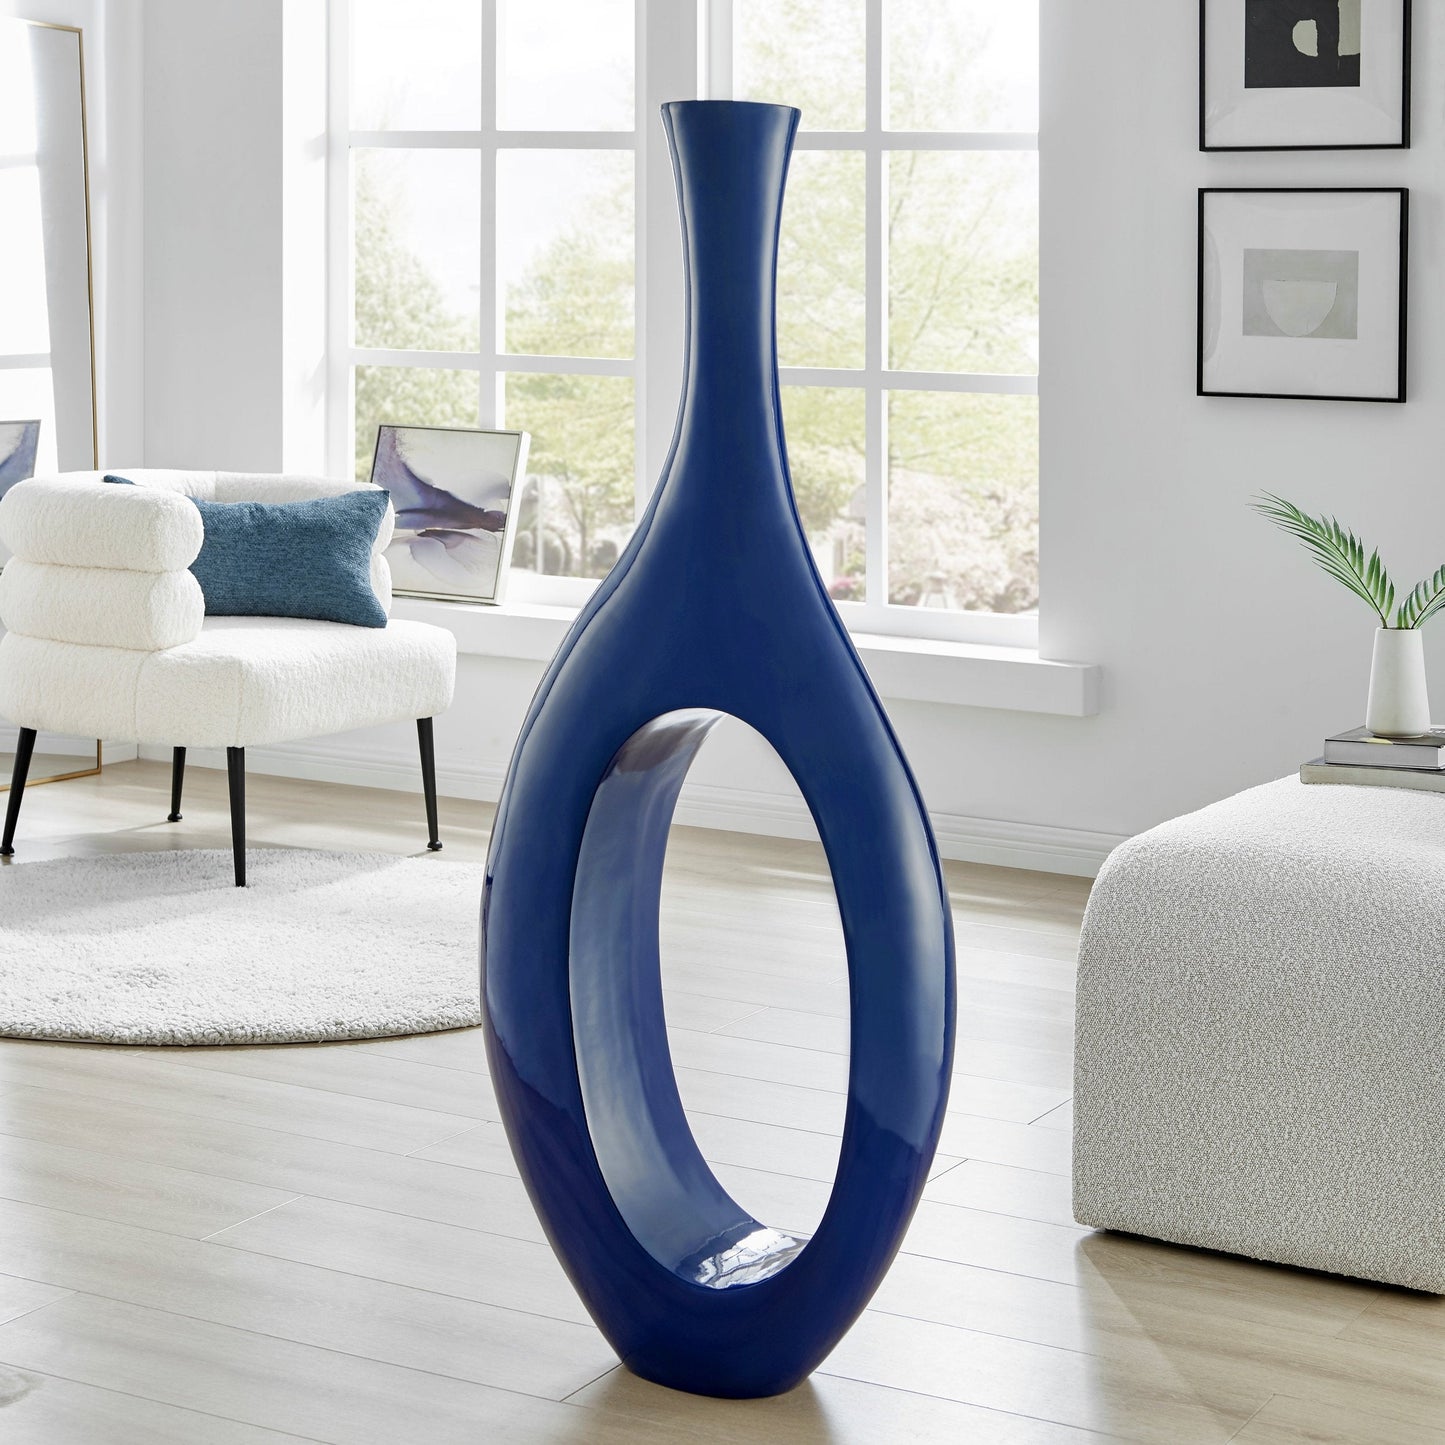 SOLANIS Trombone Vase Small Navy Blue